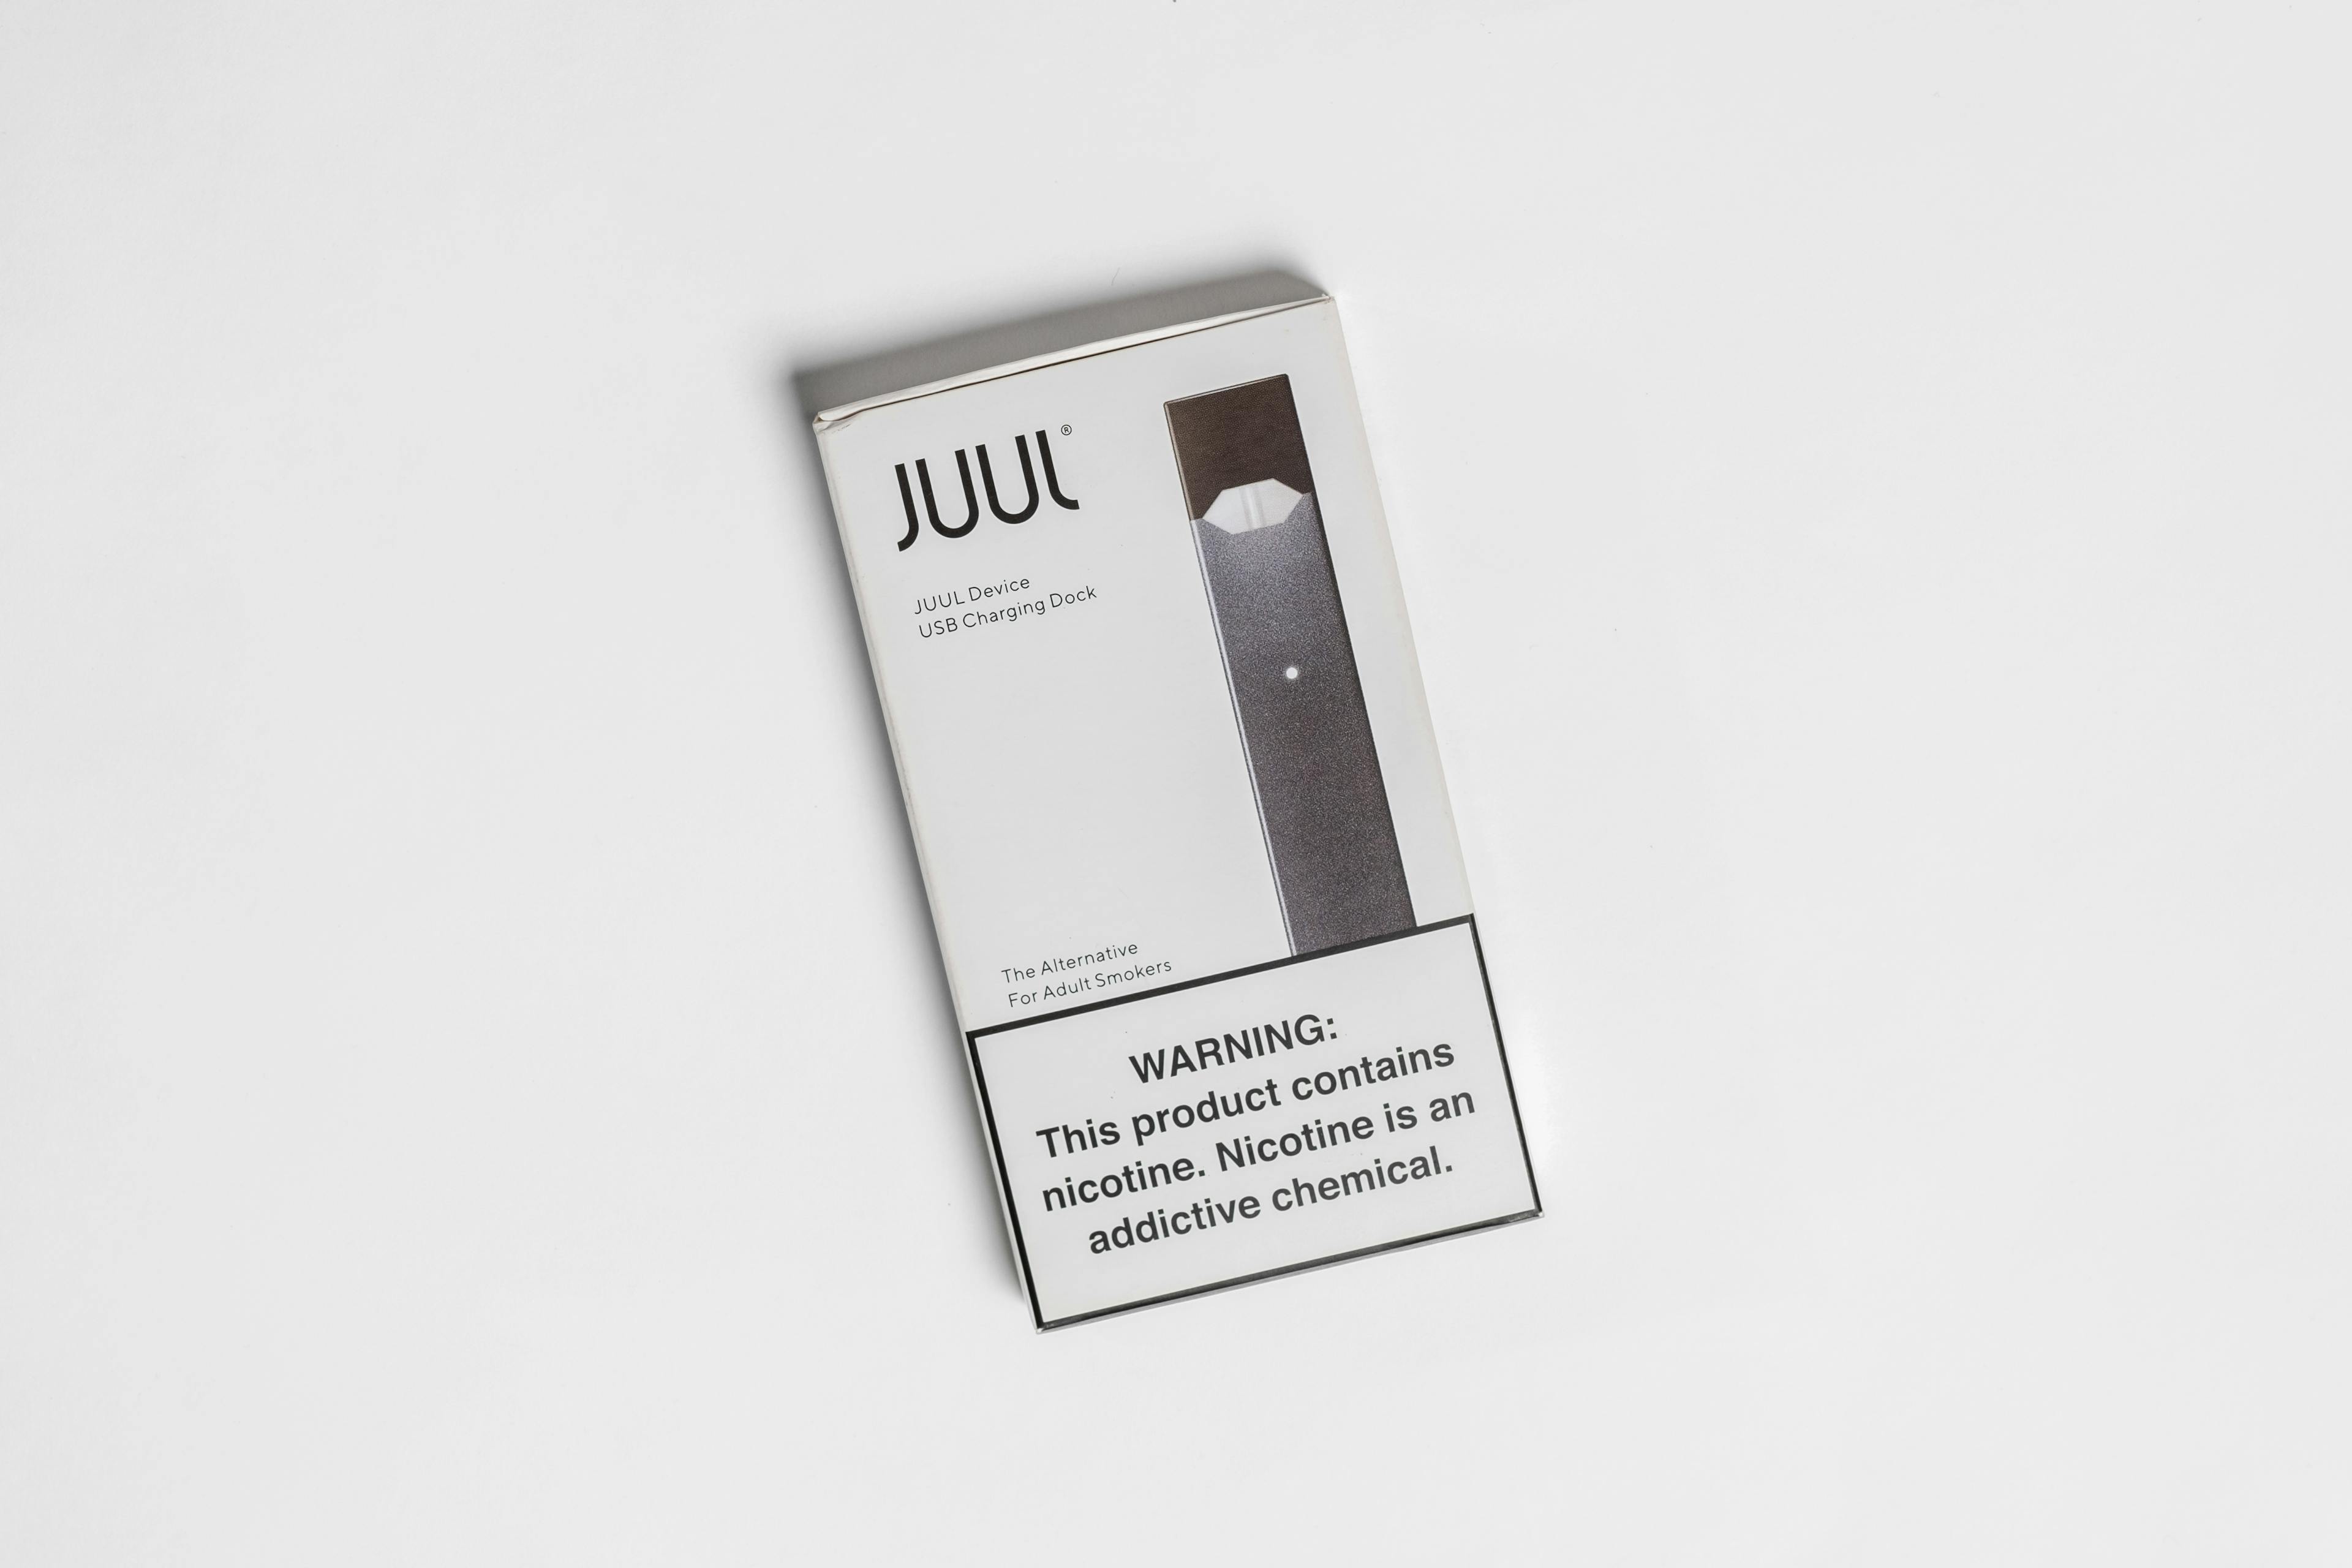 A photograph of a JUUL e-cigarette